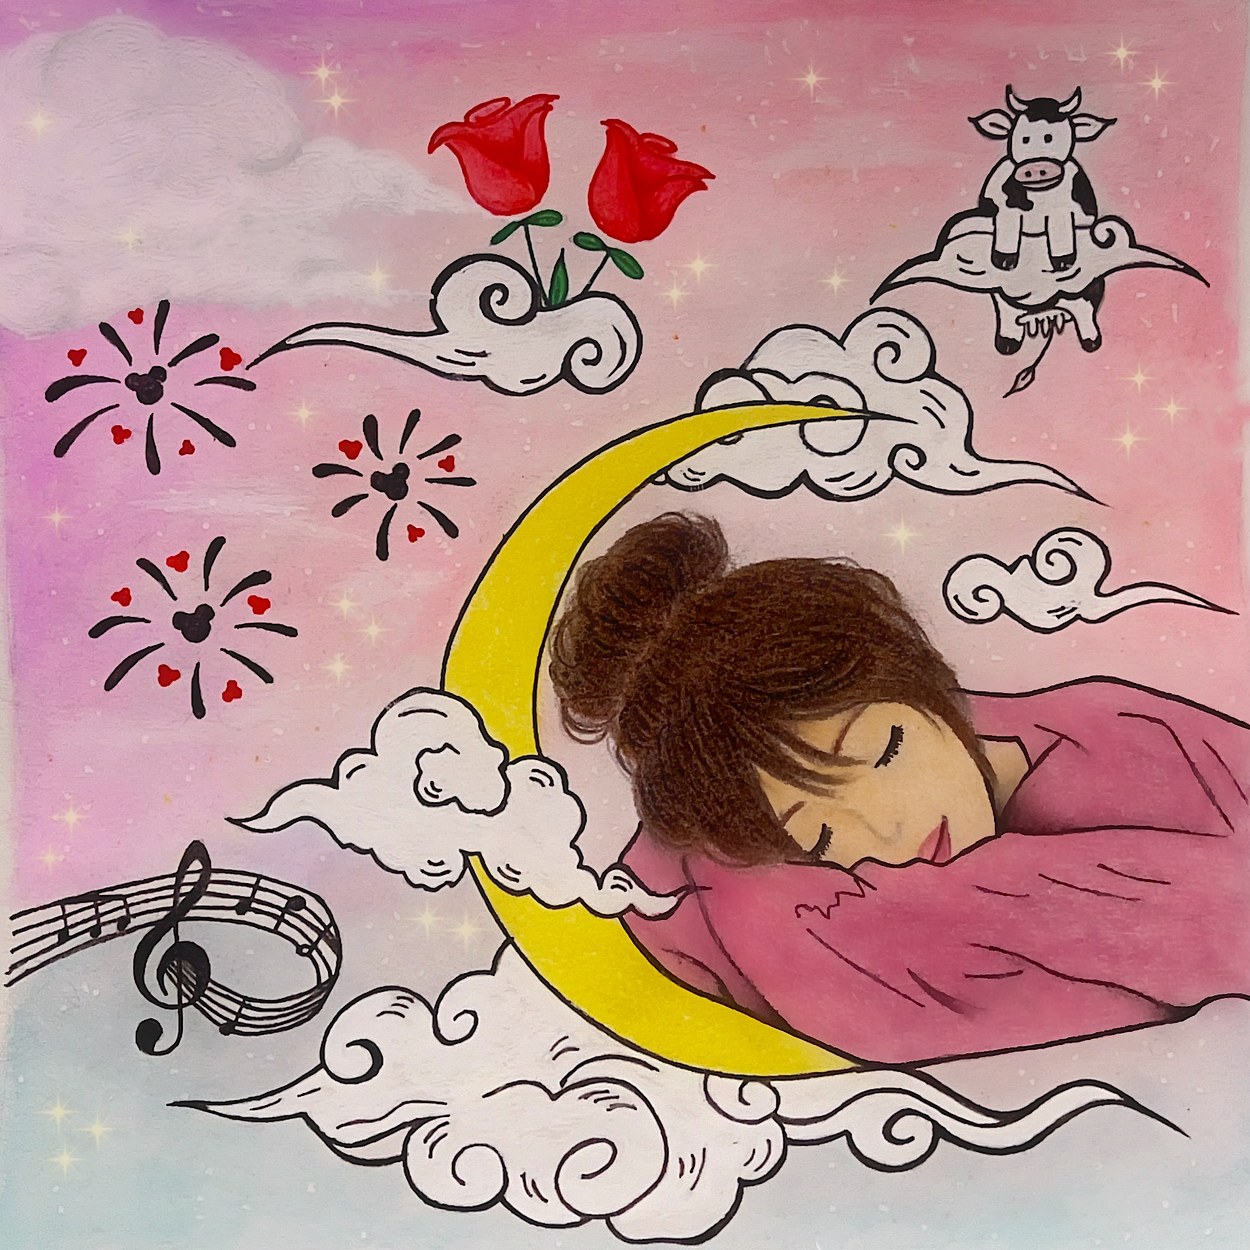 Sweet Dreams Cover Art